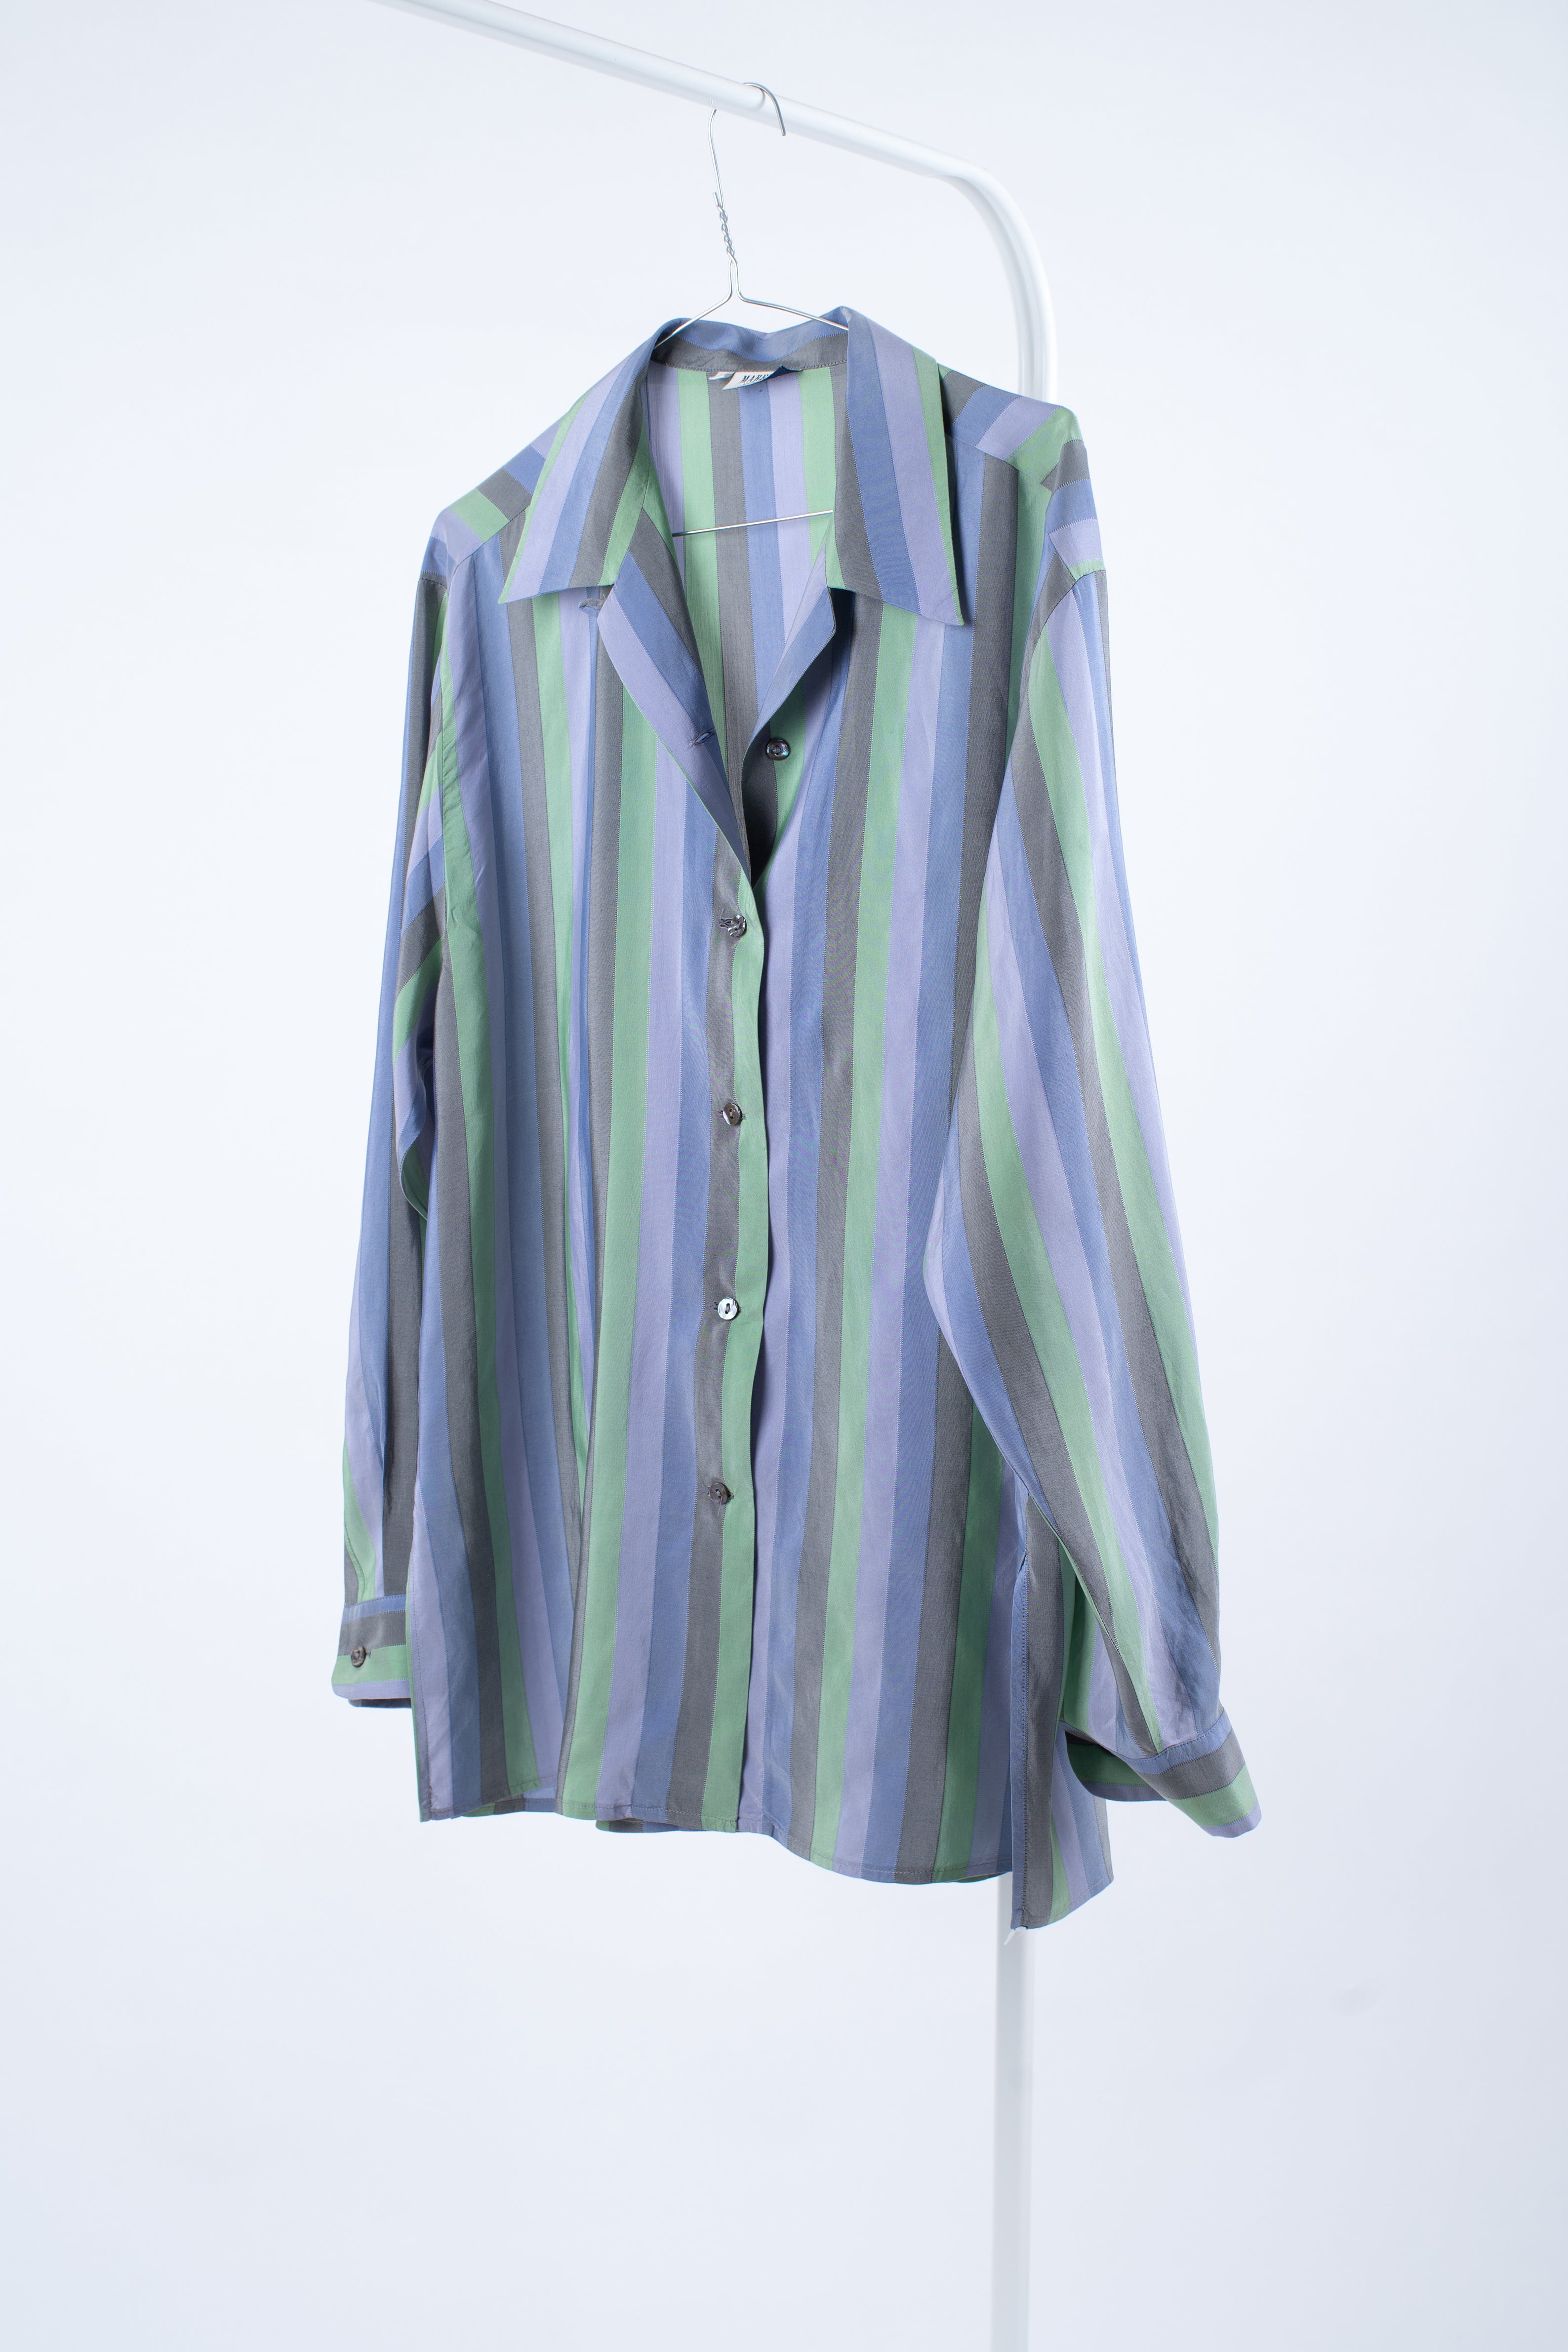 Marella Women's 100% Silk Striped Button Up Shirt, L